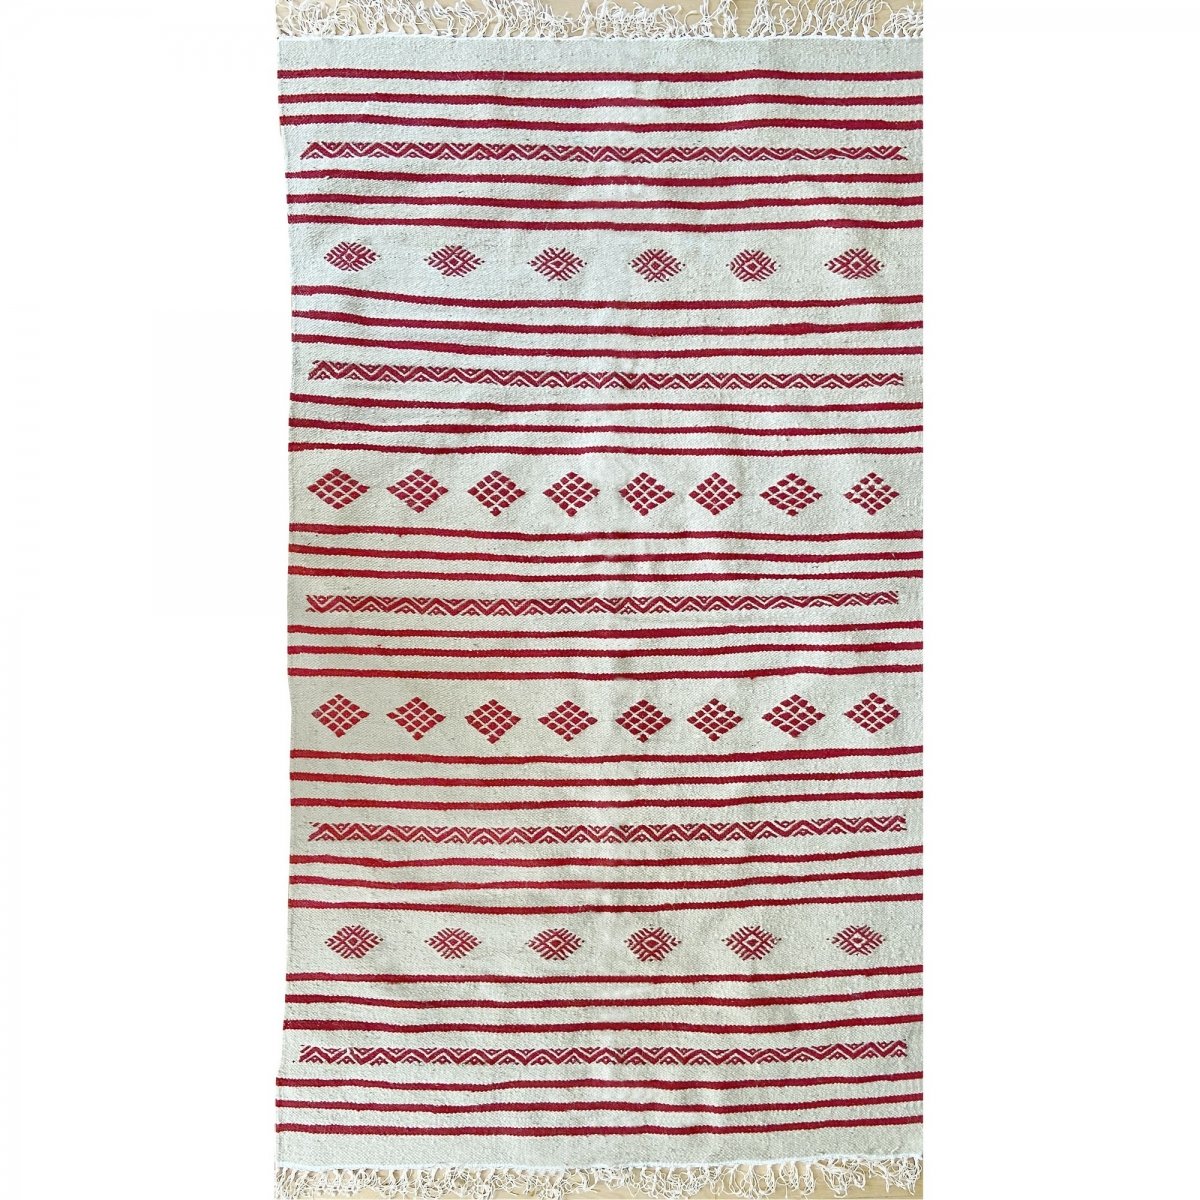 Berber tapijt Tapijt Kilim Fartouna 110x198 Wit Rood (Handgeweven, Wol, Tunesië) Tunesisch kilimdeken, Marokkaanse stijl. Rechth